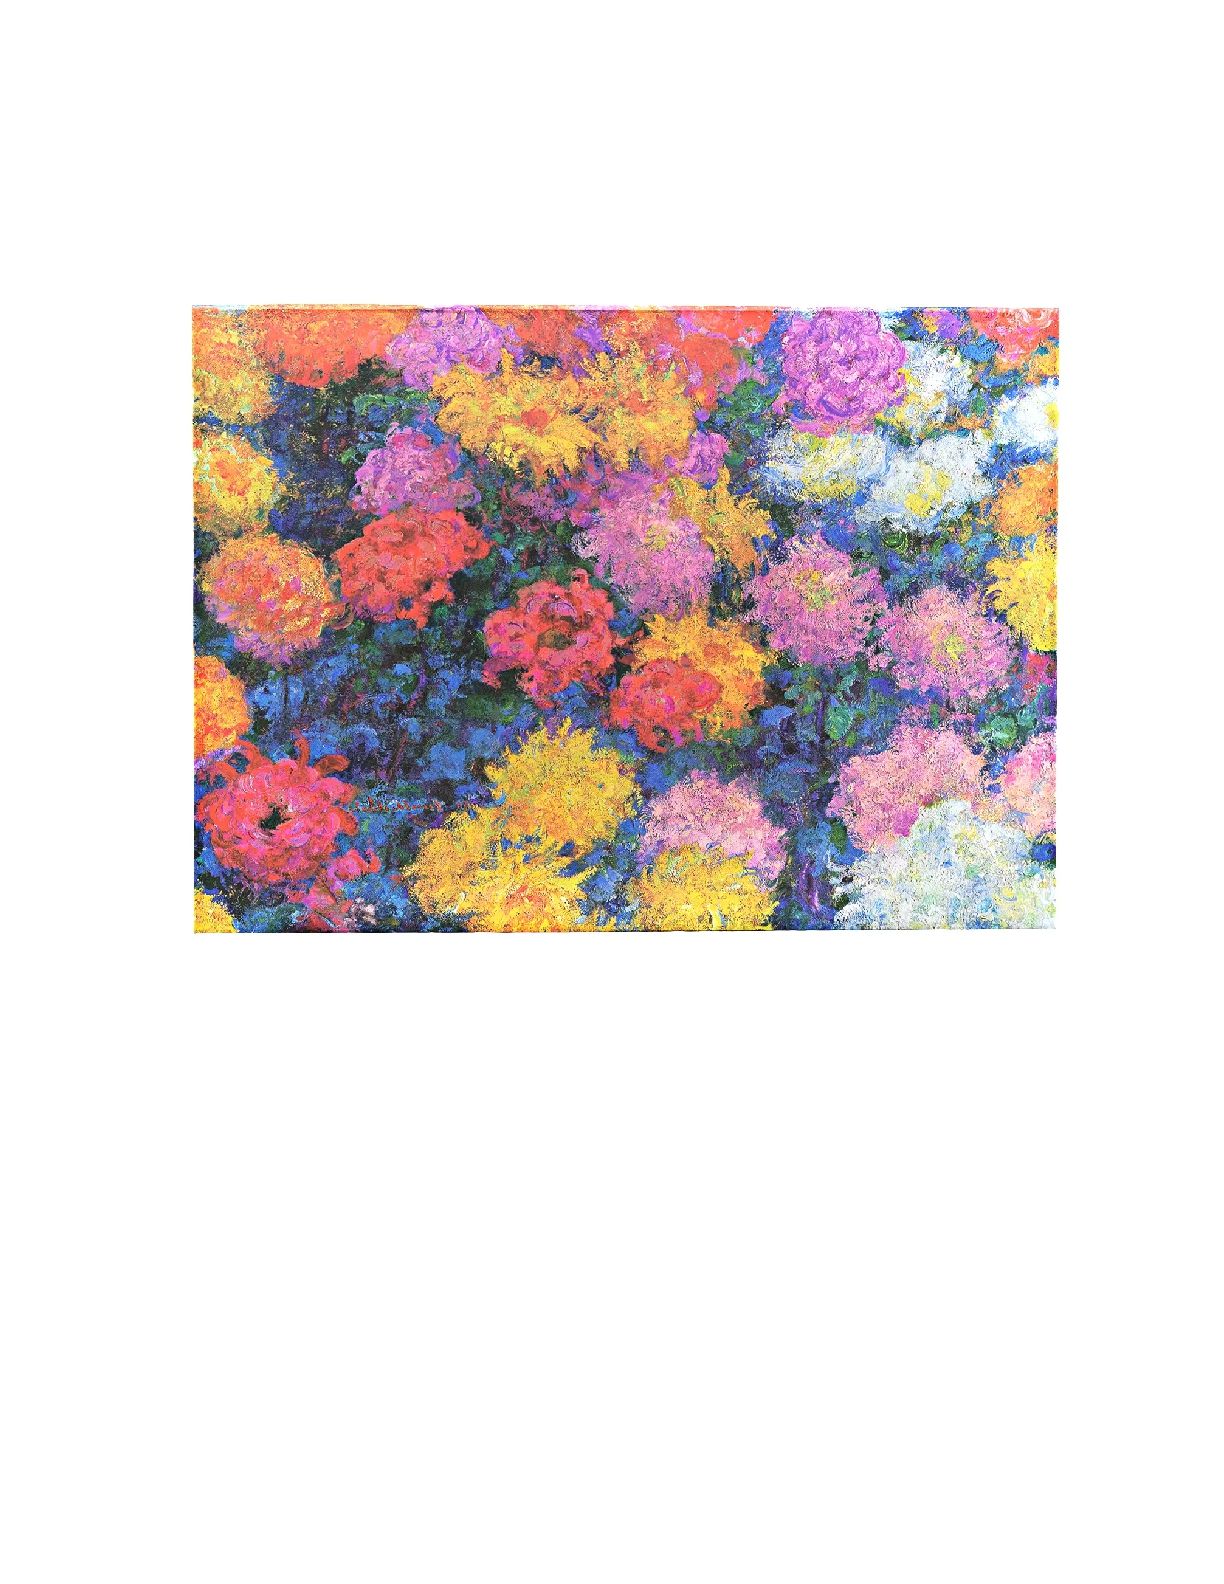 Monet's Chrysanthemums, Document Folders, Document Folder, Wrap